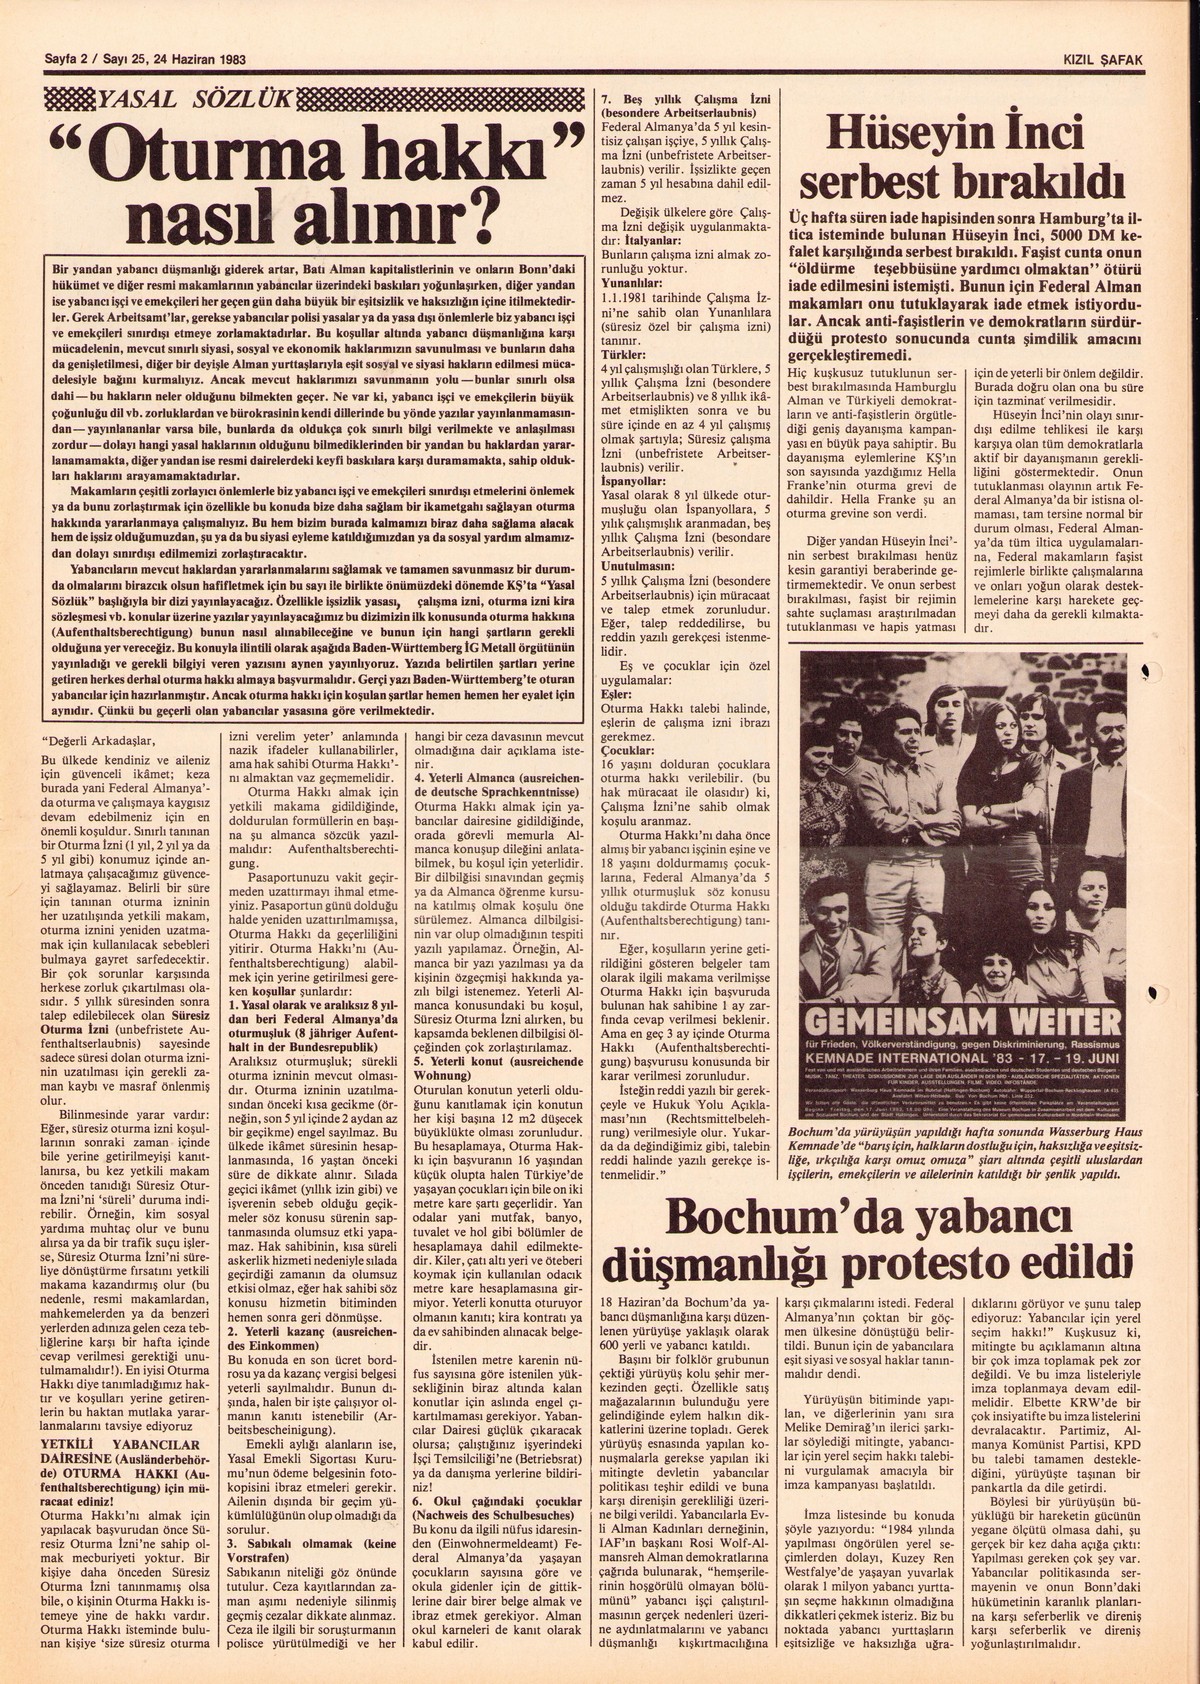 Roter Morgen, 17. Jg., 24. Juni 1983, Nr. 25, Seite 14